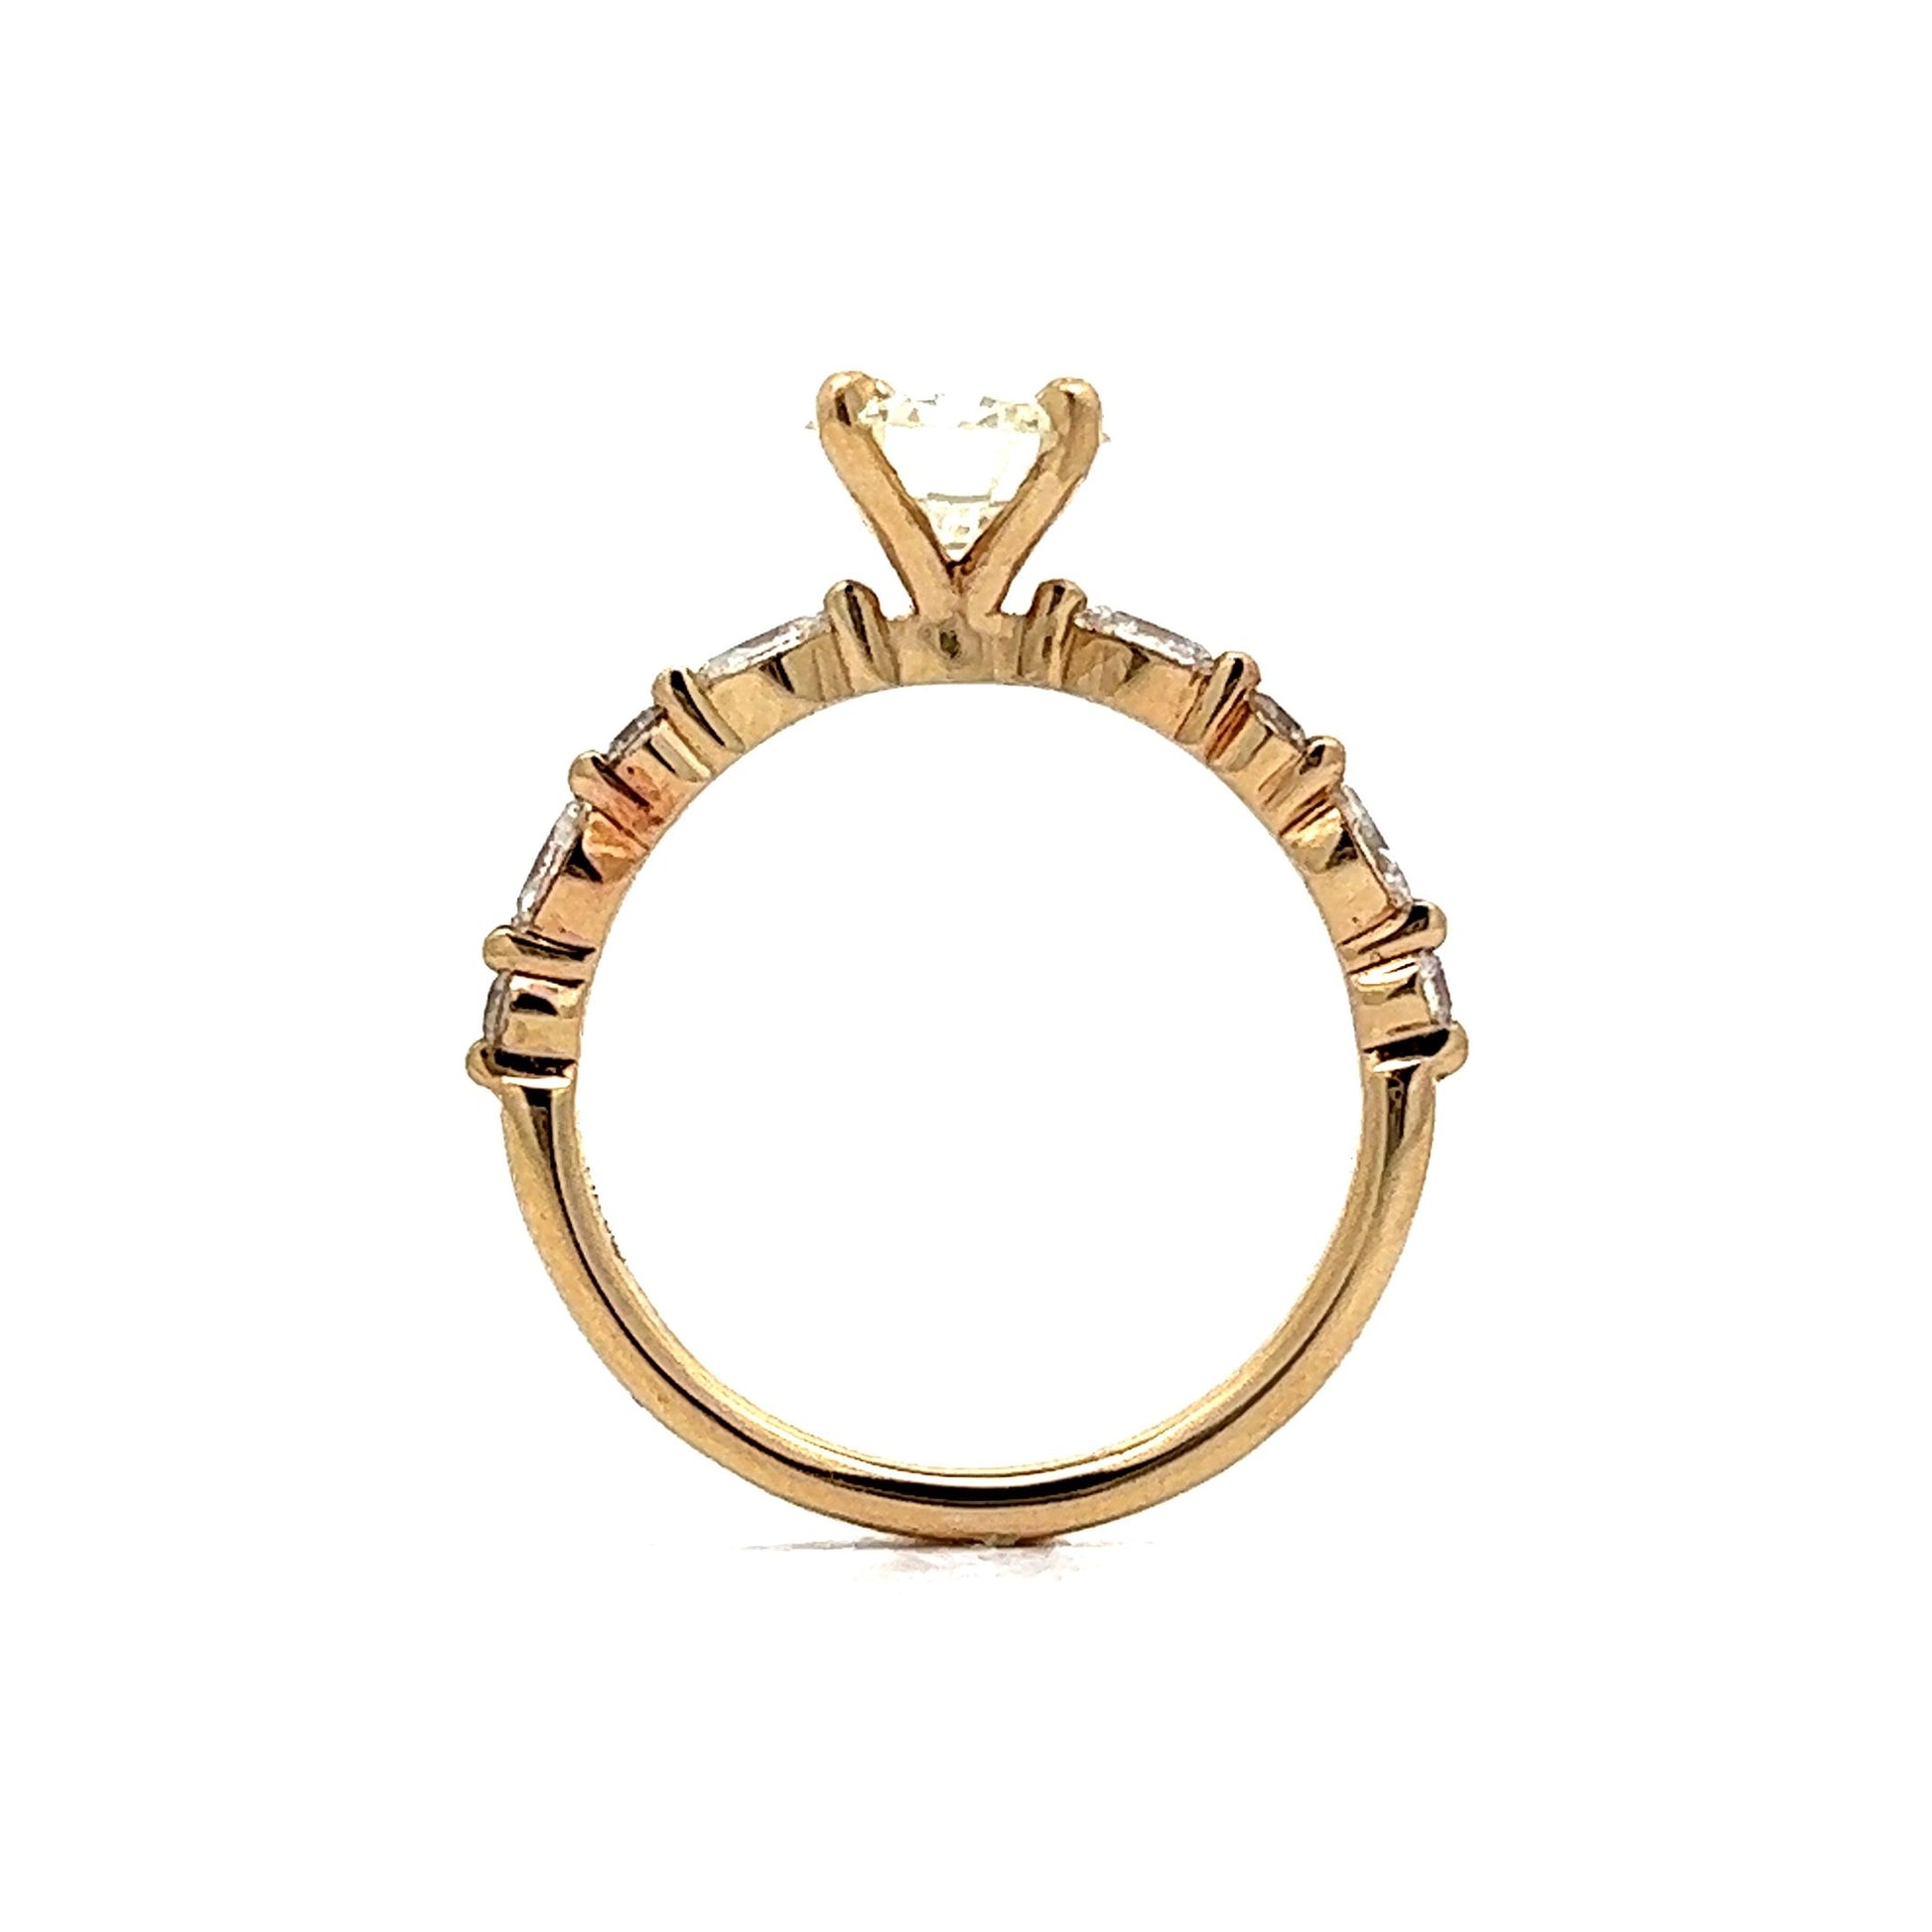 1 Carat Round Diamond Engagement Ring in 14k Yellow Gold